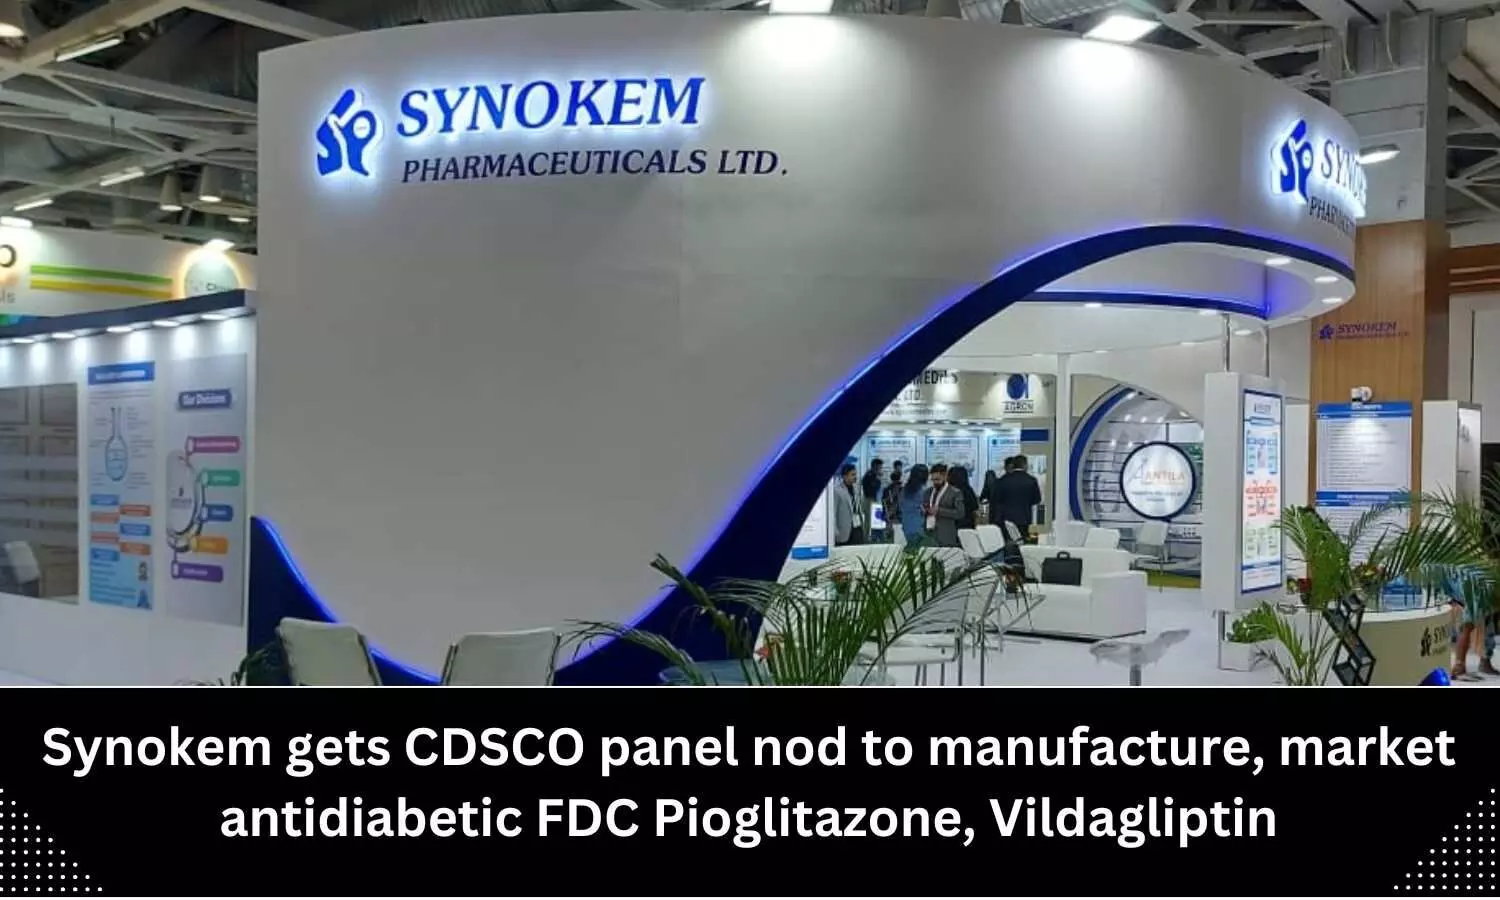 CDSCO nod to Synokem Pharma for marketing, manufacturing antidiabetic FDC Pioglitazone, Vildagliptin